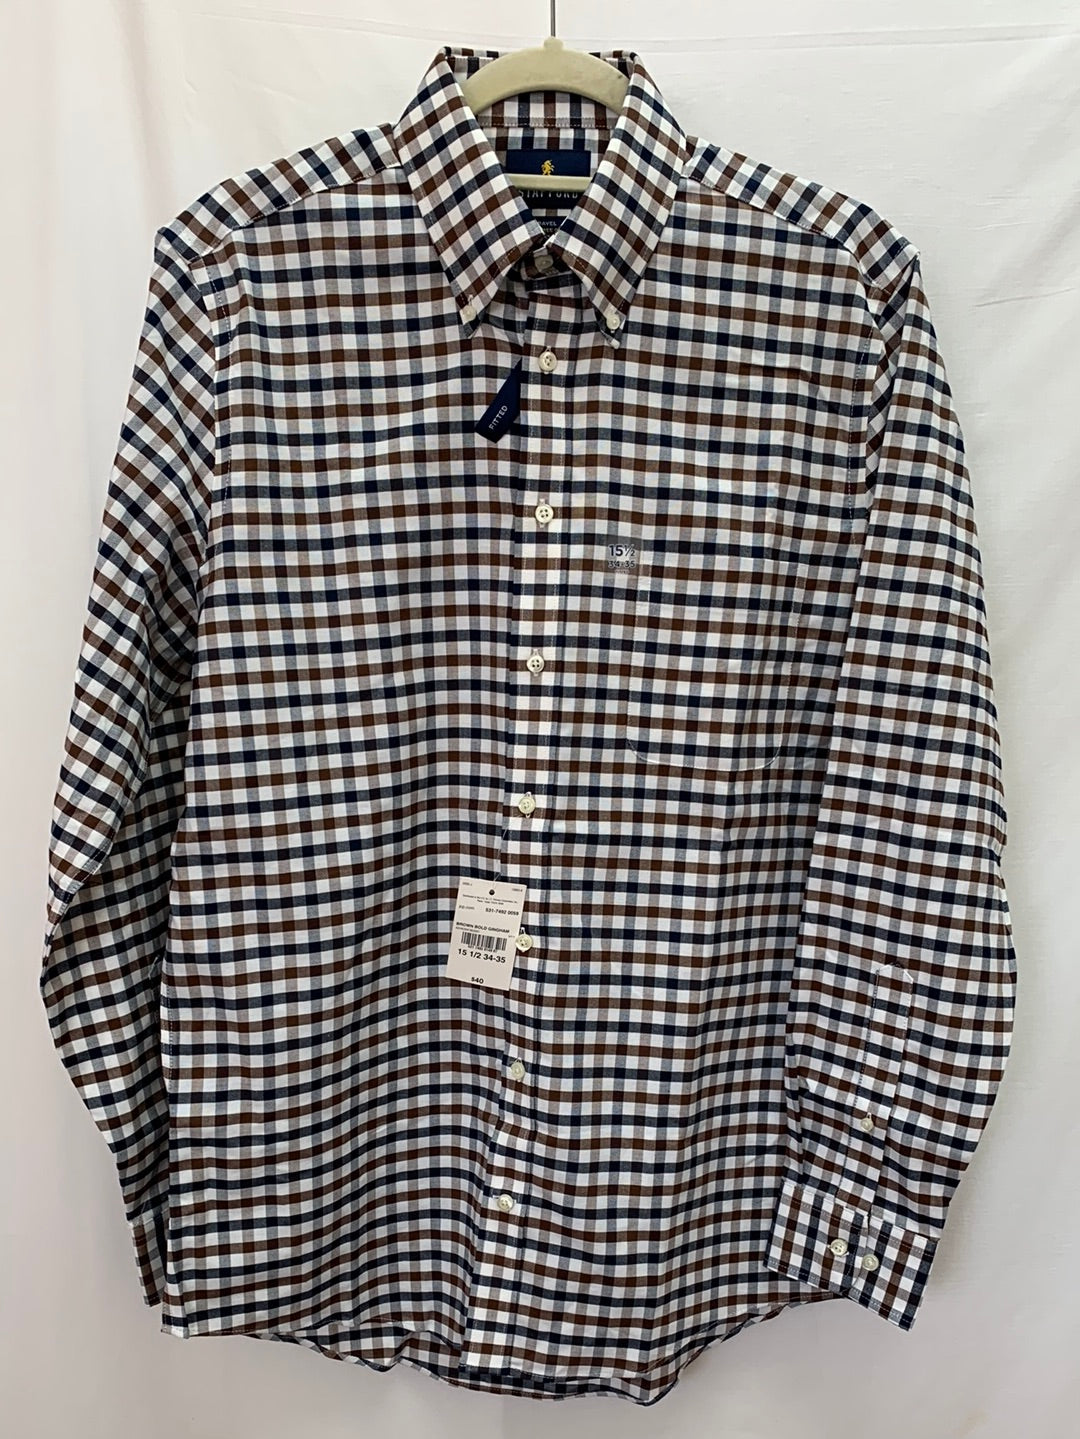 NWT - STAFFORD brown Checkered Wrinkle-Free Oxford Shirt - 15.5 34-35